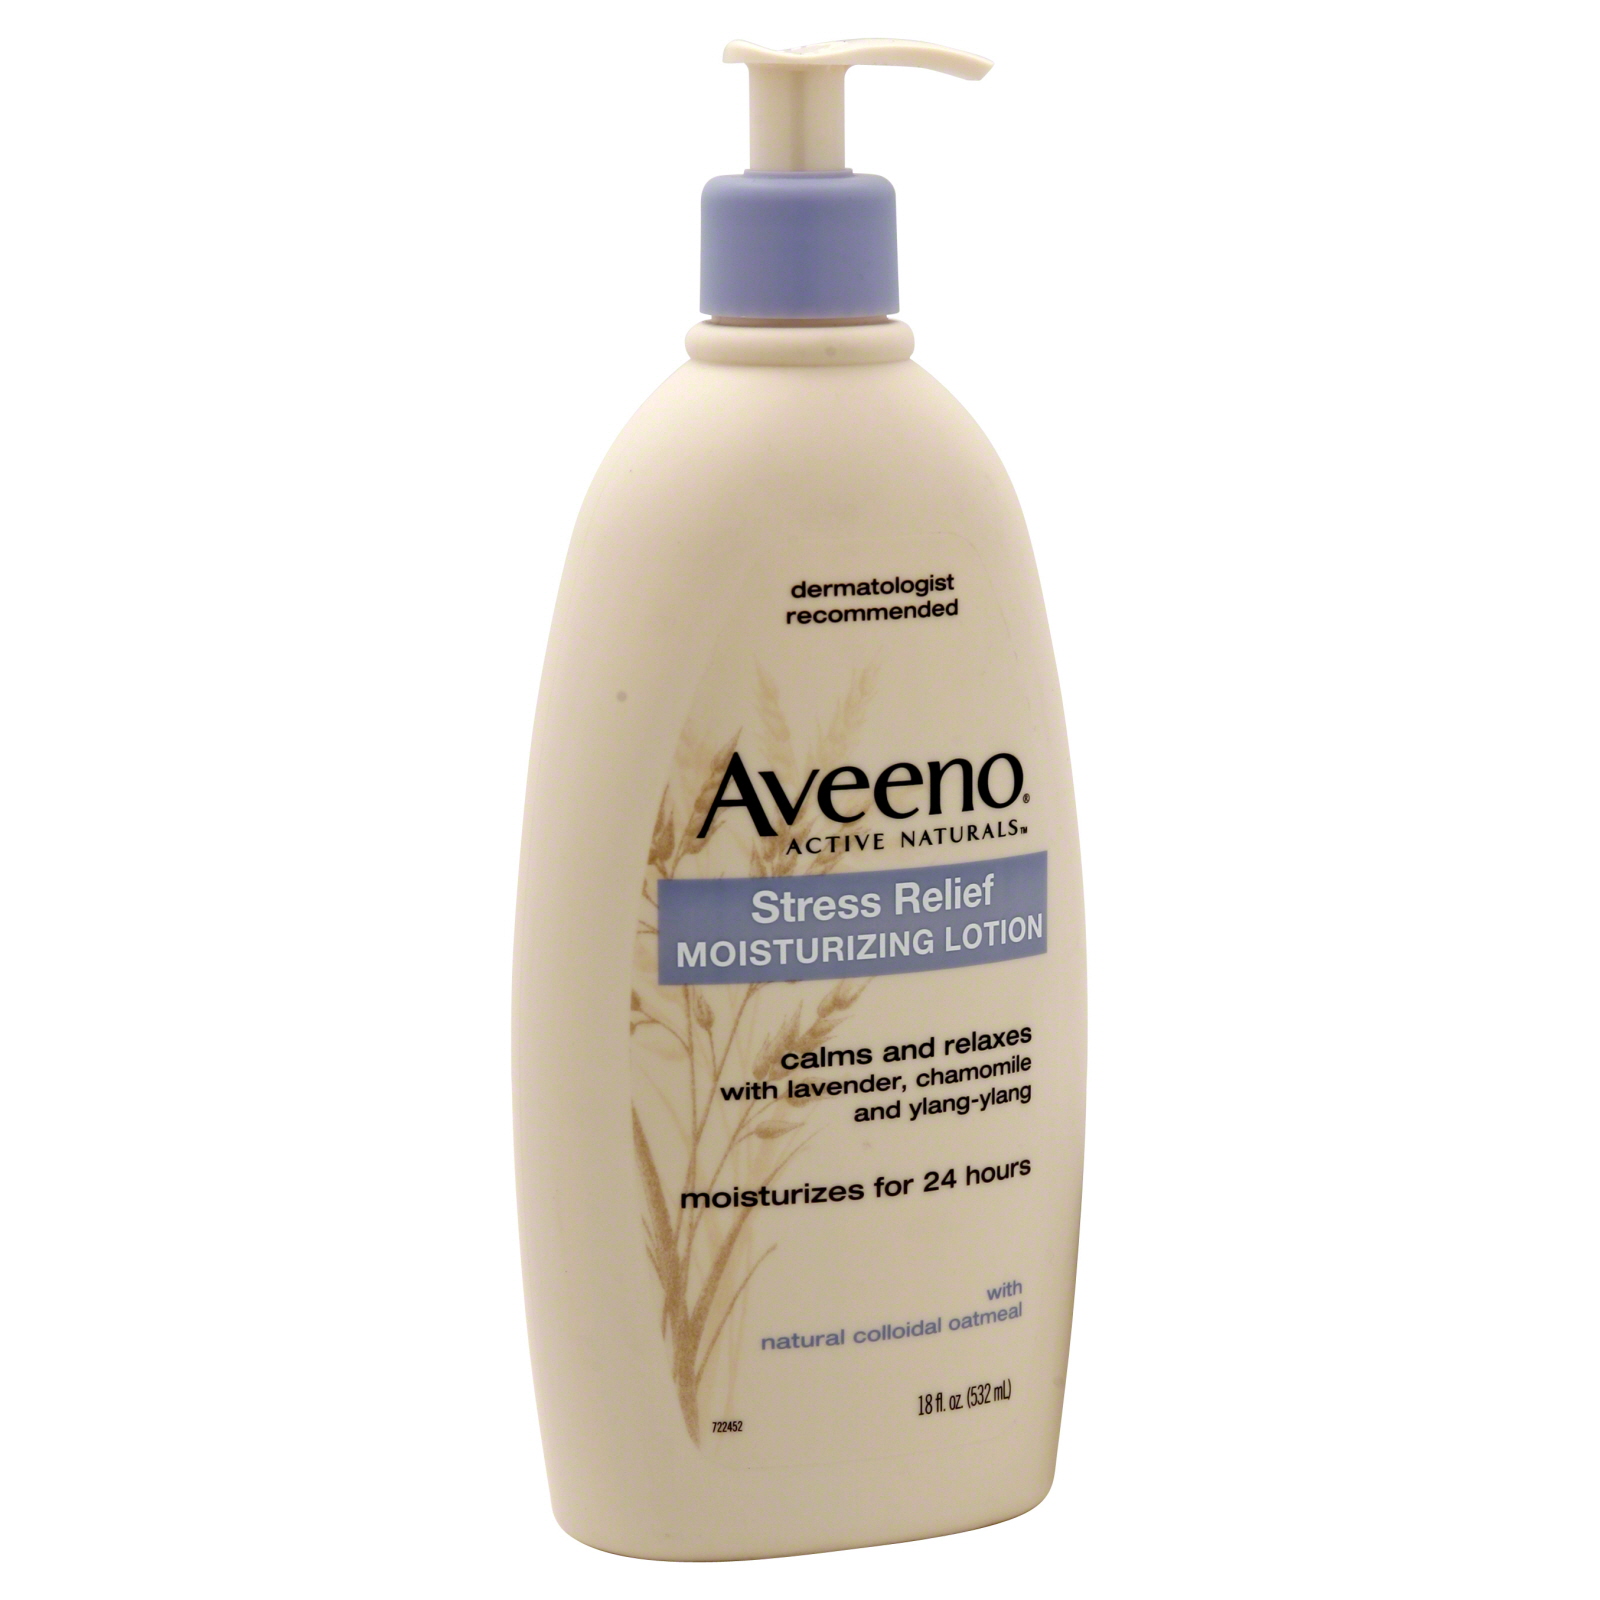 Aveeno Active Naturals Moisturizing Lotion, Stress Relief, 18 fl oz (532 ml)